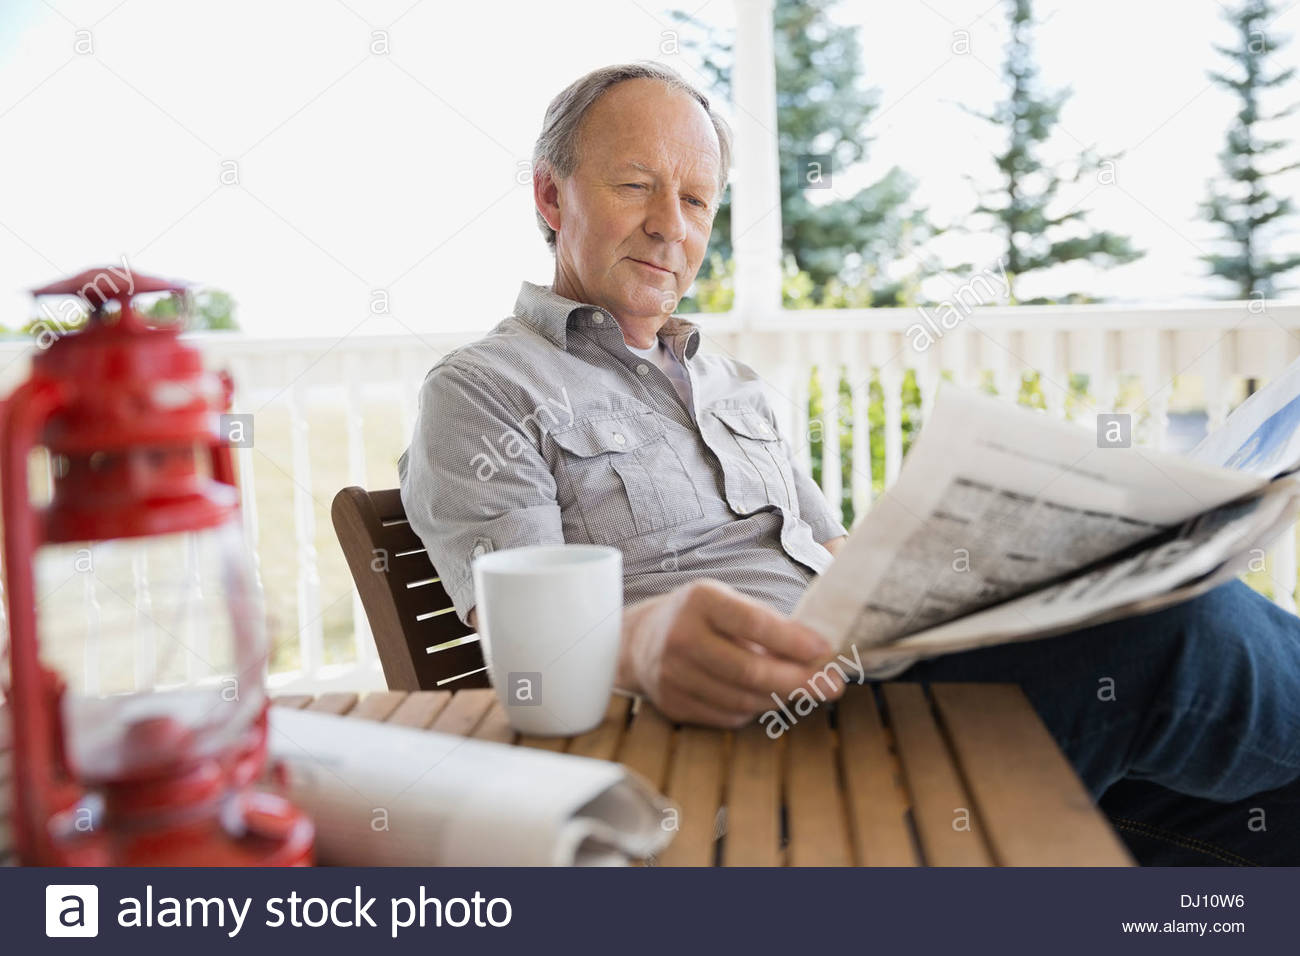 Senior man reading newspaper on porch Stock Photo